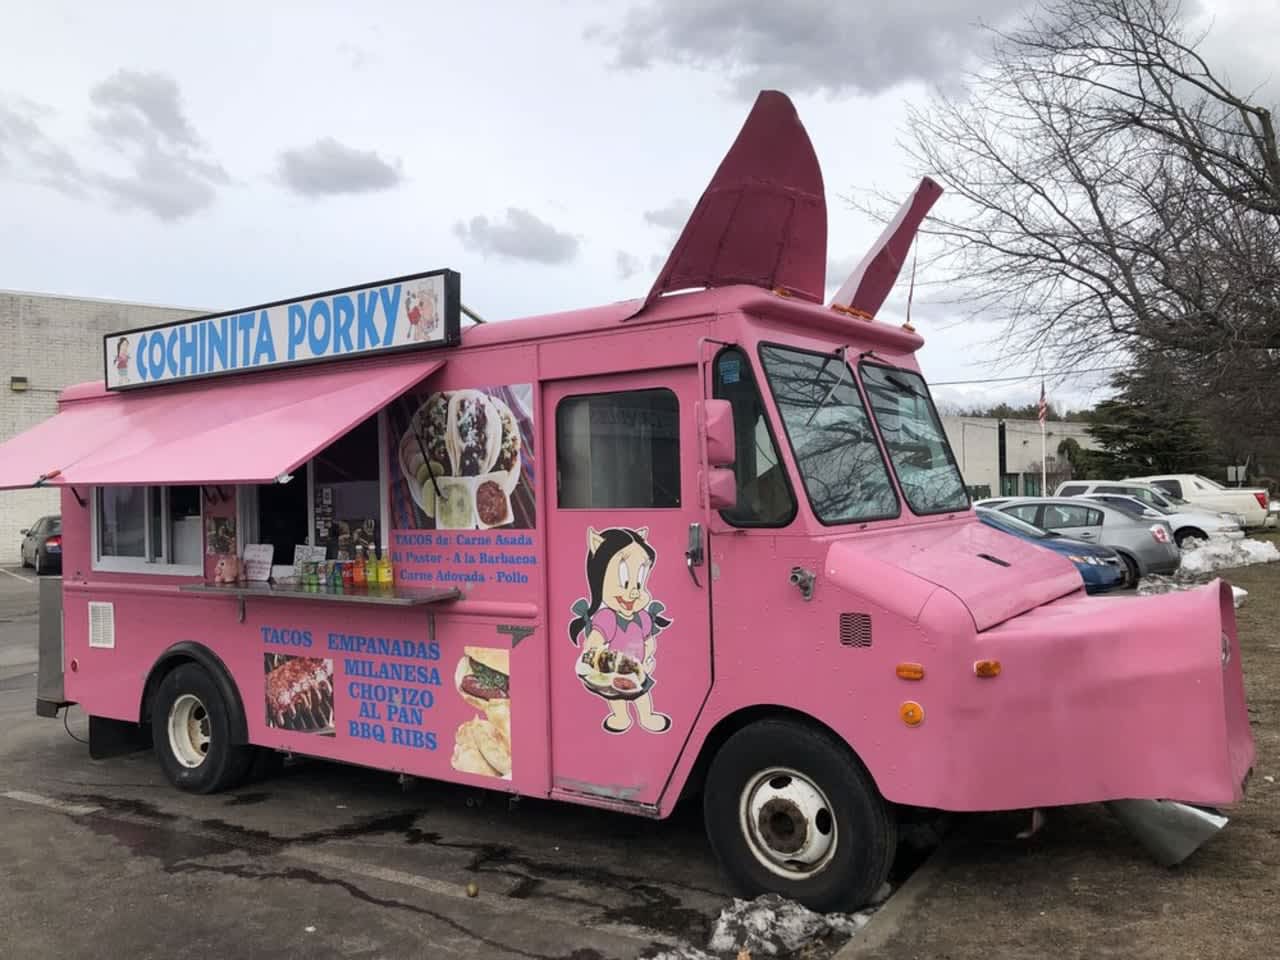 A favorite food truck on Long Island is Cochinita Porky.